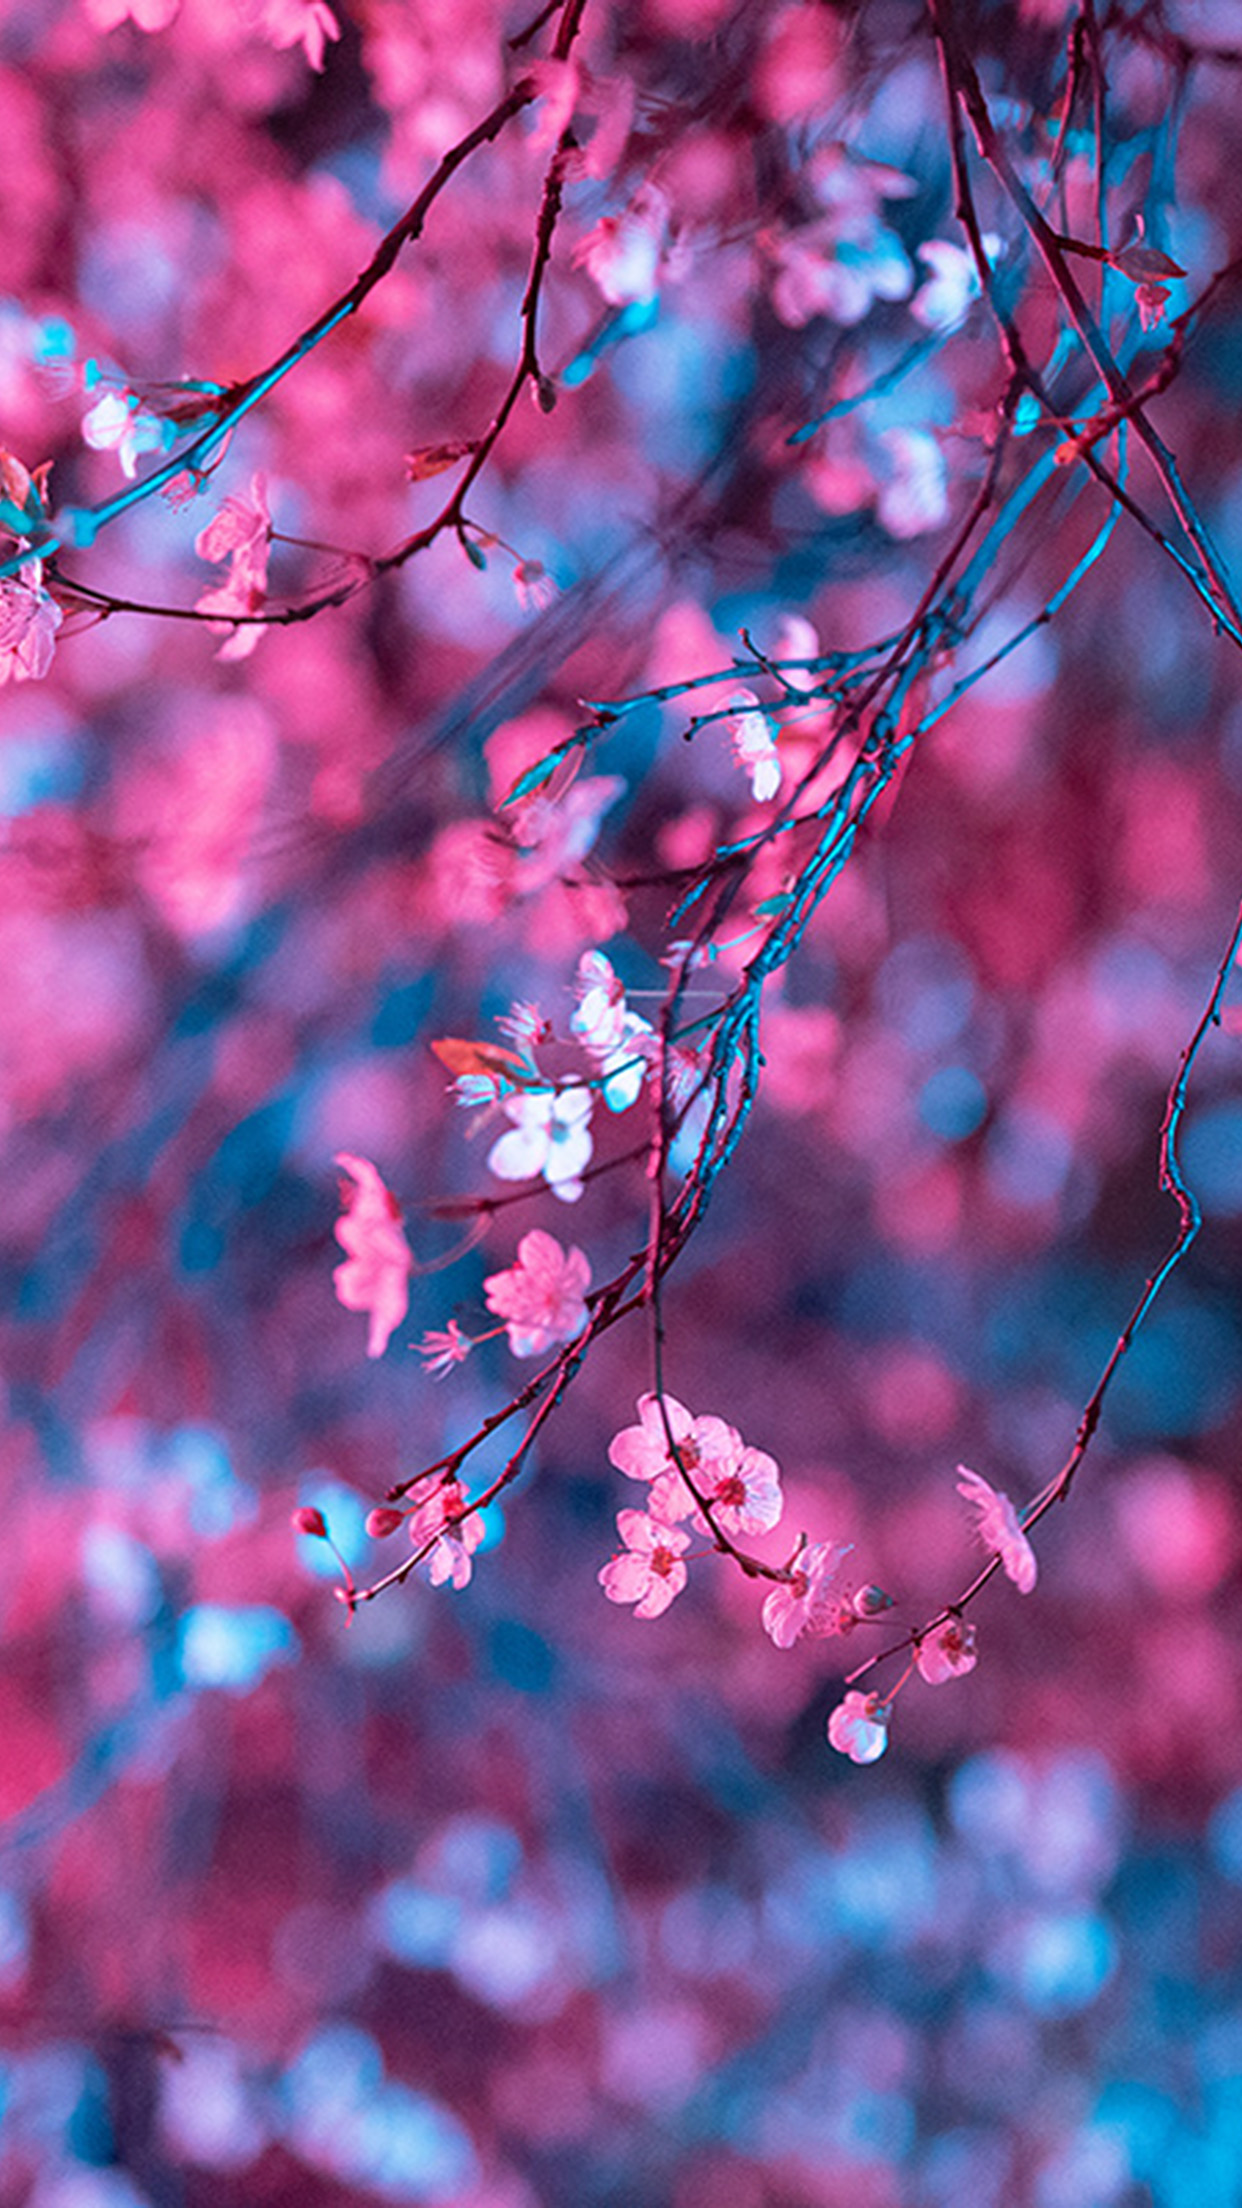 iPhone X wallpaper. art flower red light cherry blossom spring